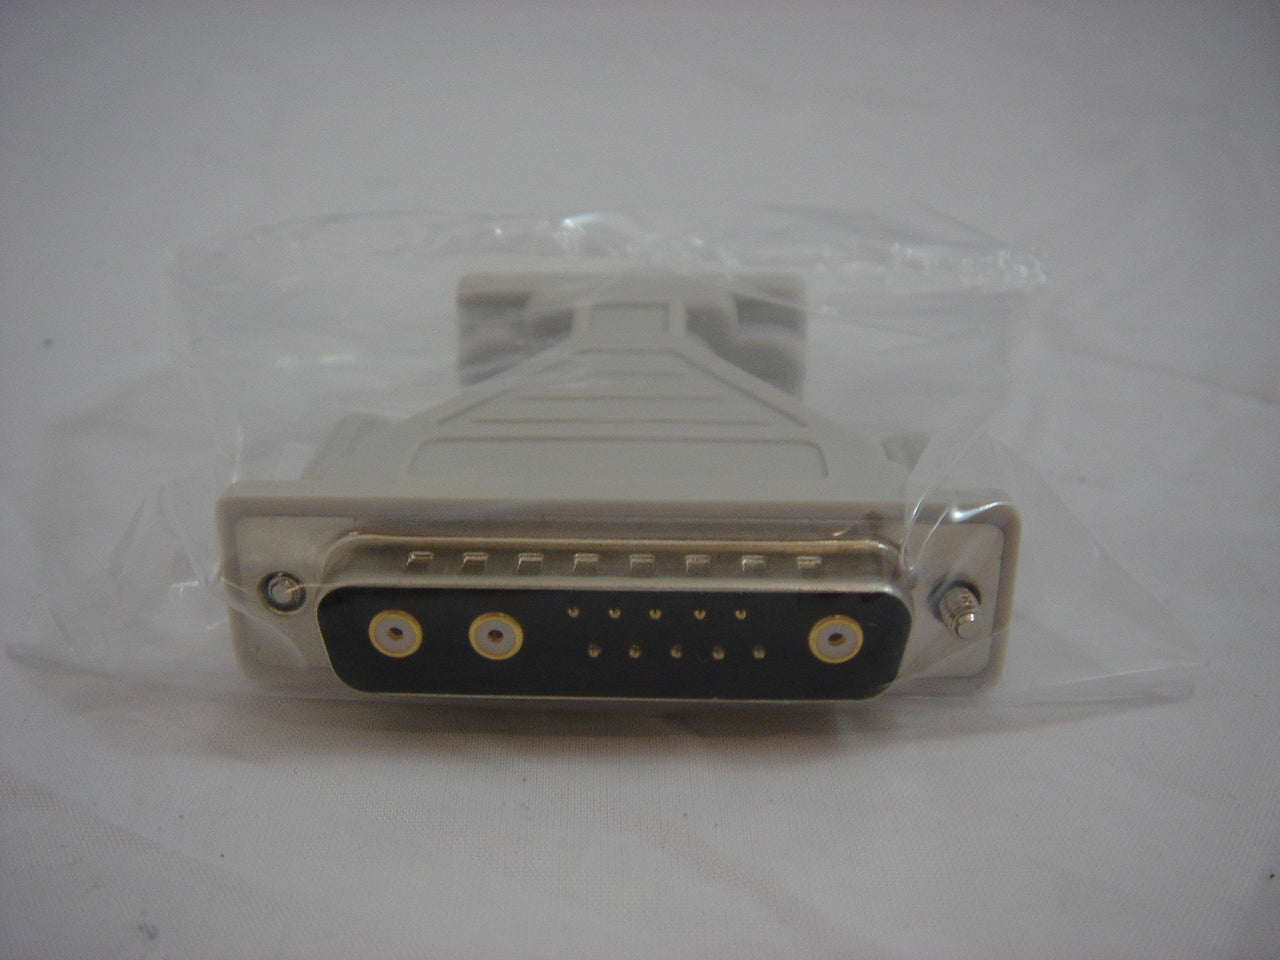 130-3034MX - Adaptor for Monitor Cable (VGA to Sun/SGI 13W3) - Refurbished